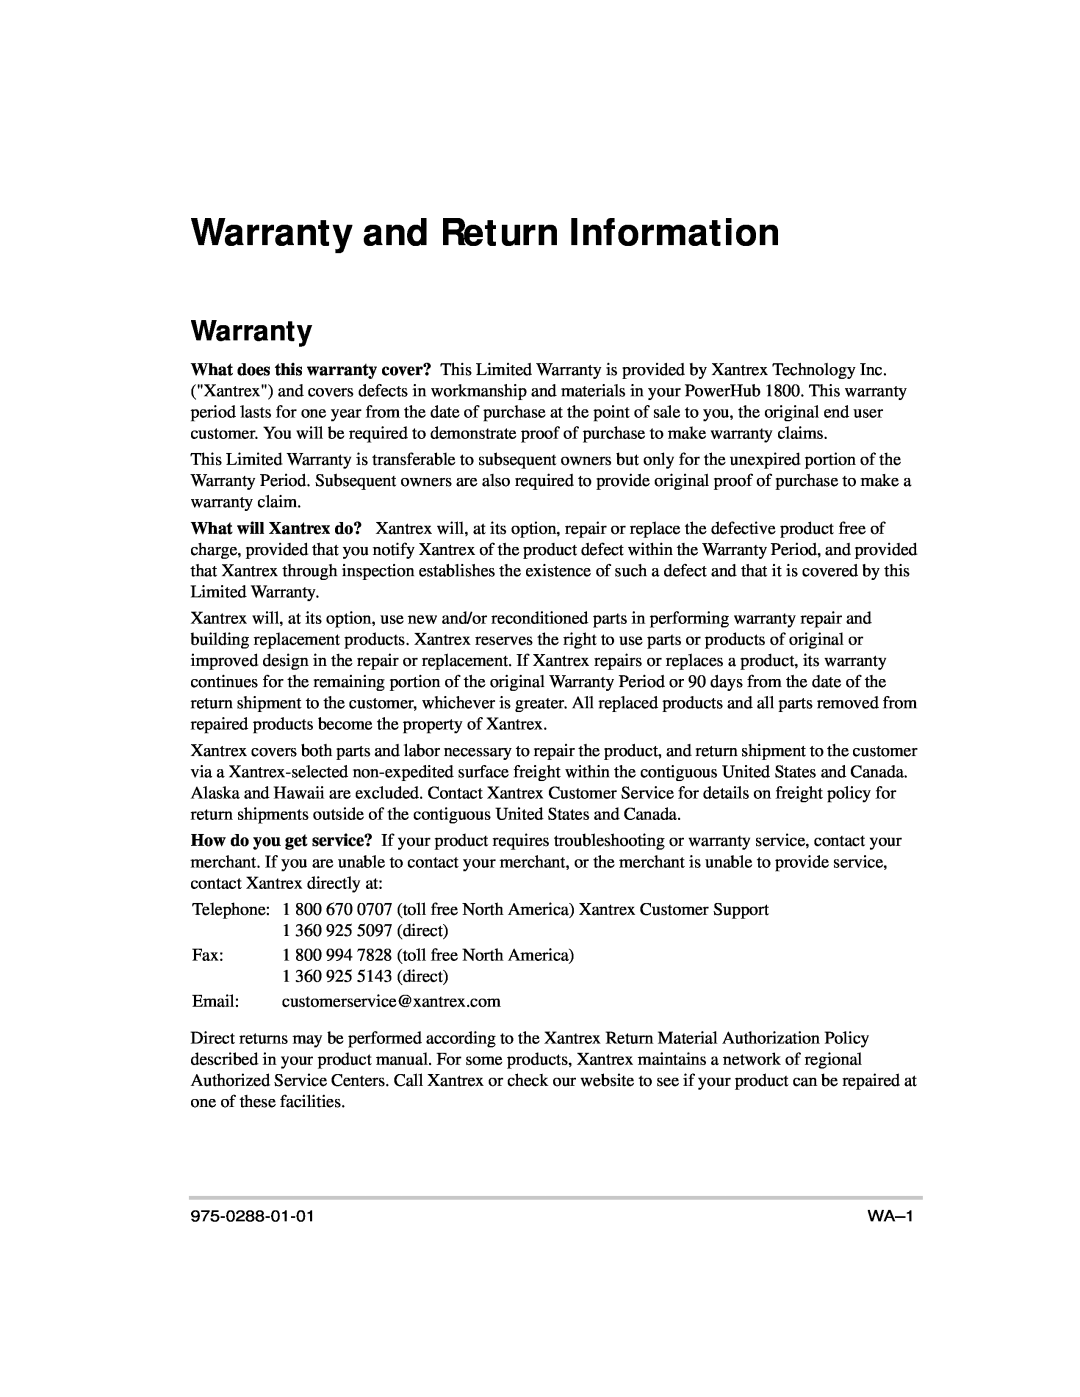 Xantrex Technology PH1800 manual Warranty and Return Information 